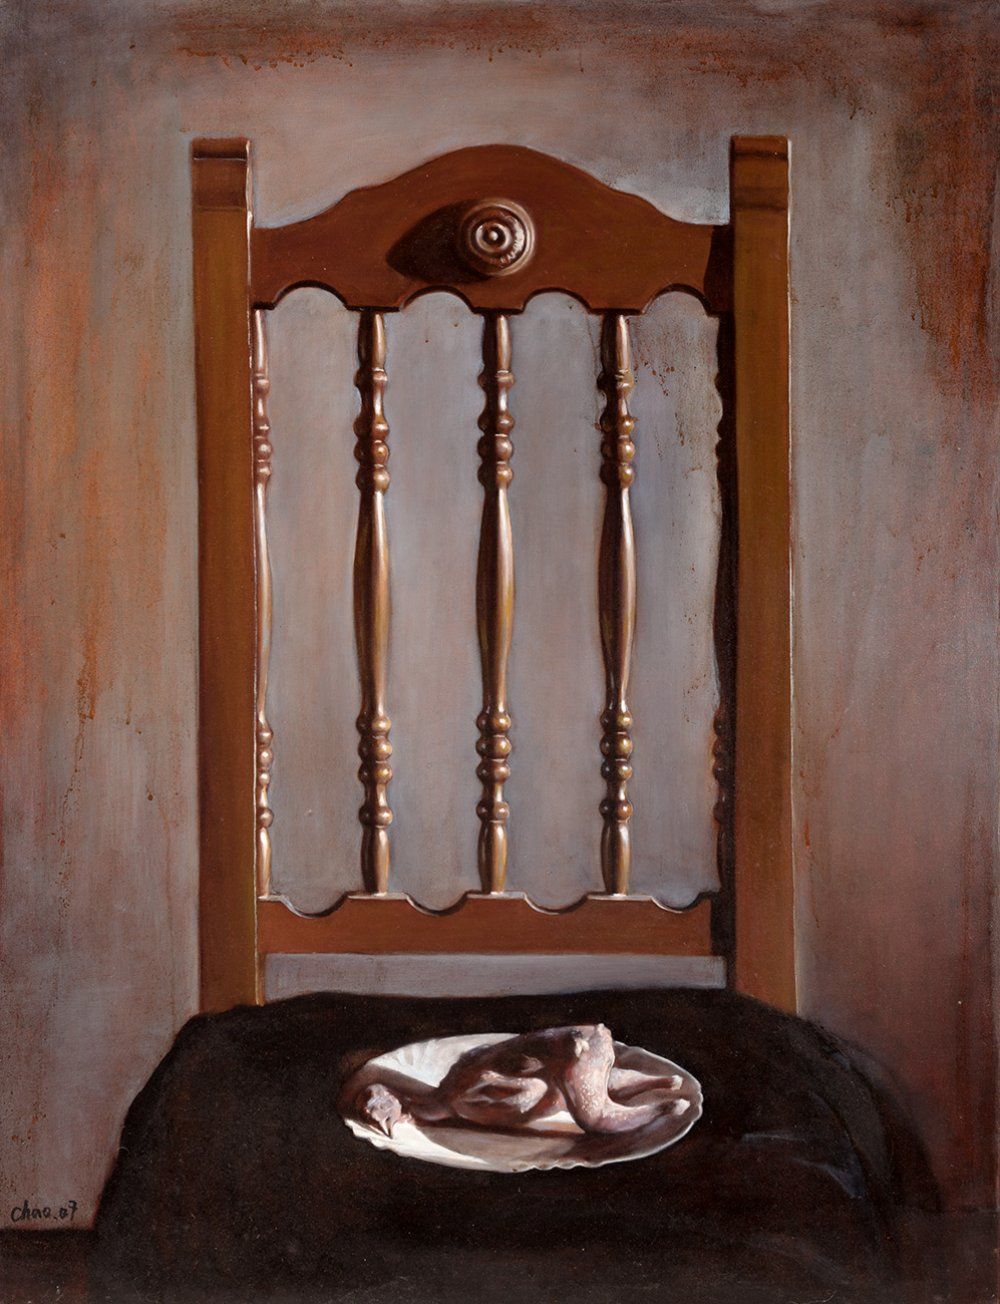 Null CHAO CHENG HUANG (Taiwán, 1977)
"La silla", 2007.
Óleo sobre lienzo.
Firmad&hellip;